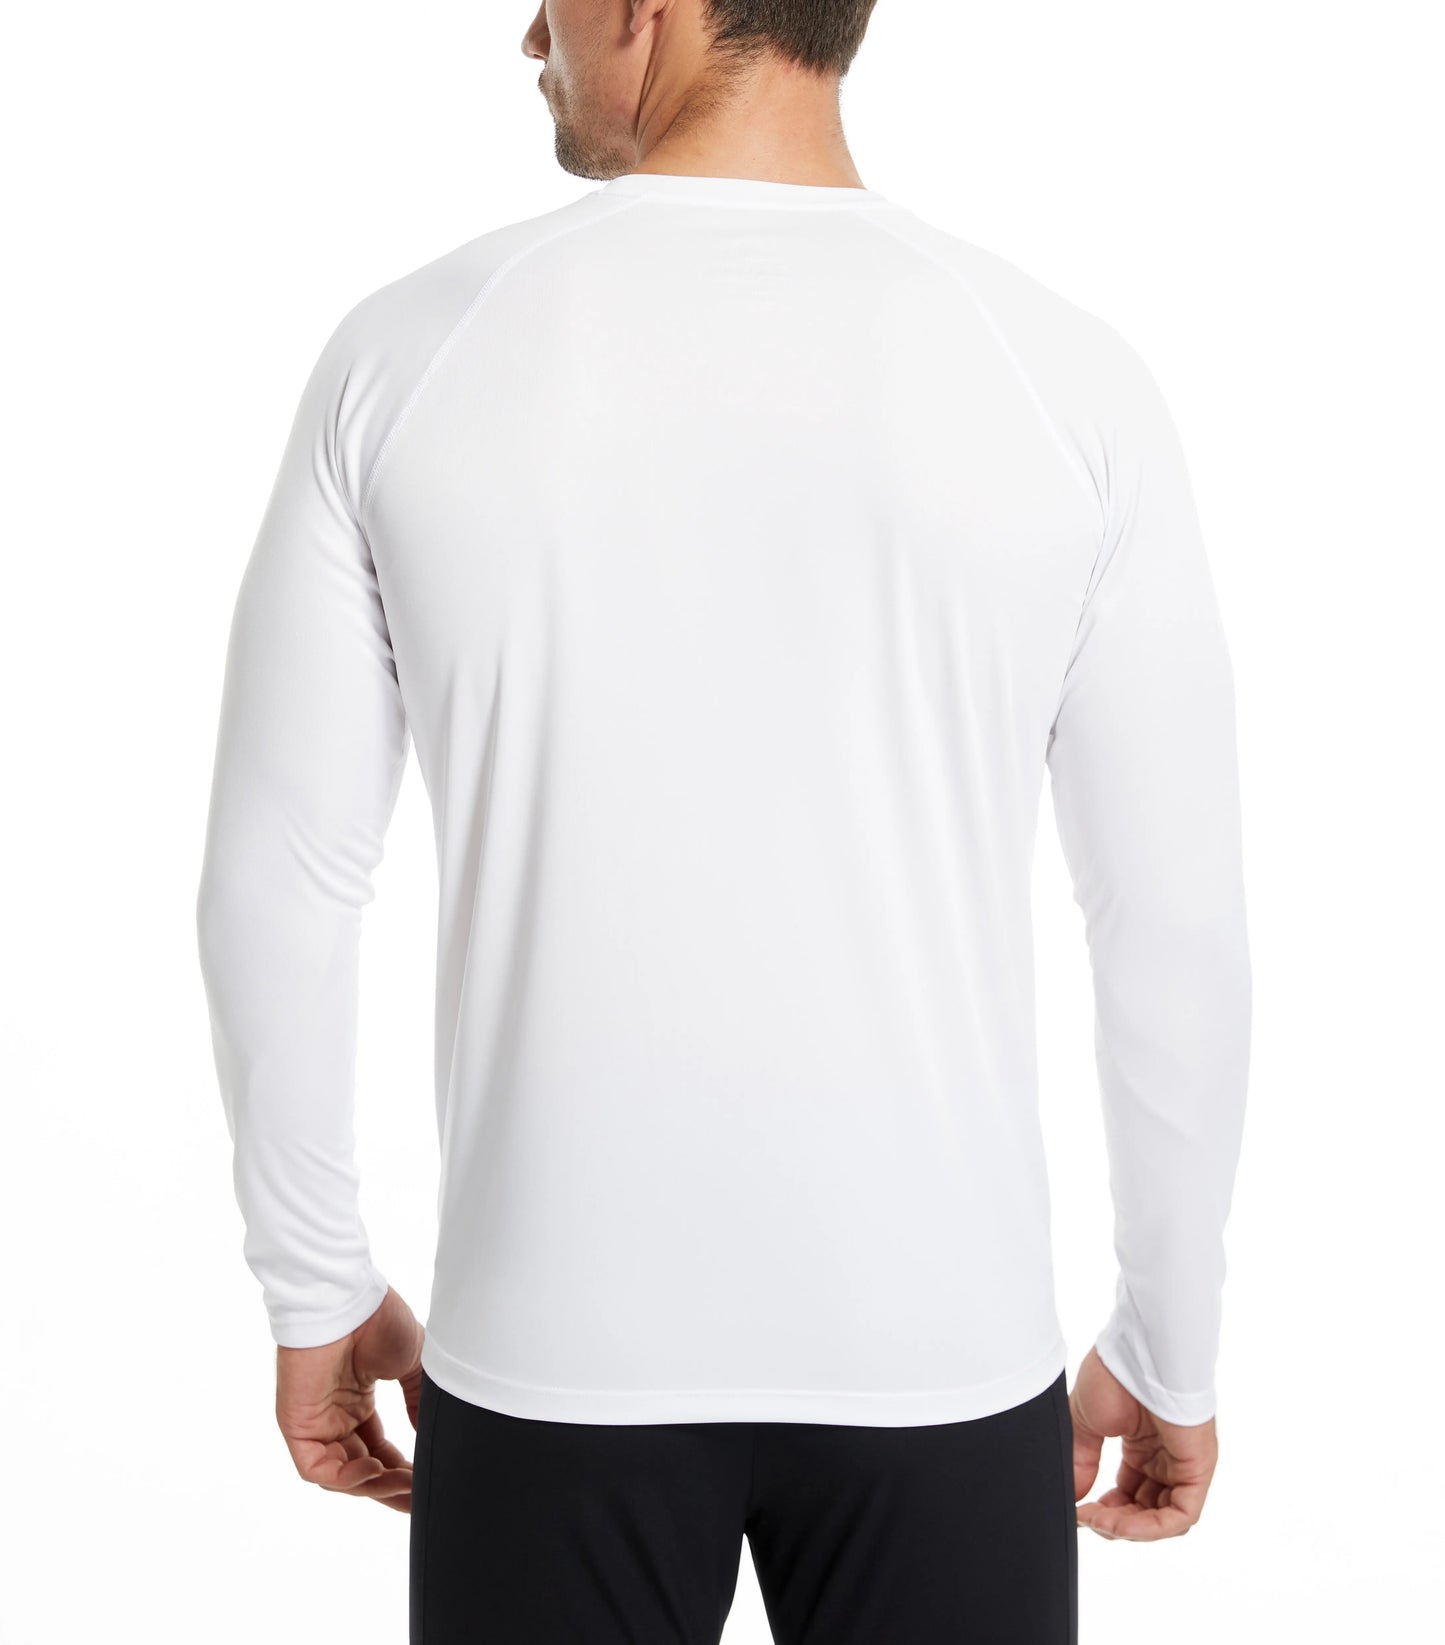 ZengVee 2 Pack Men's Long Sleeve & Drying Surfing T-Shirt